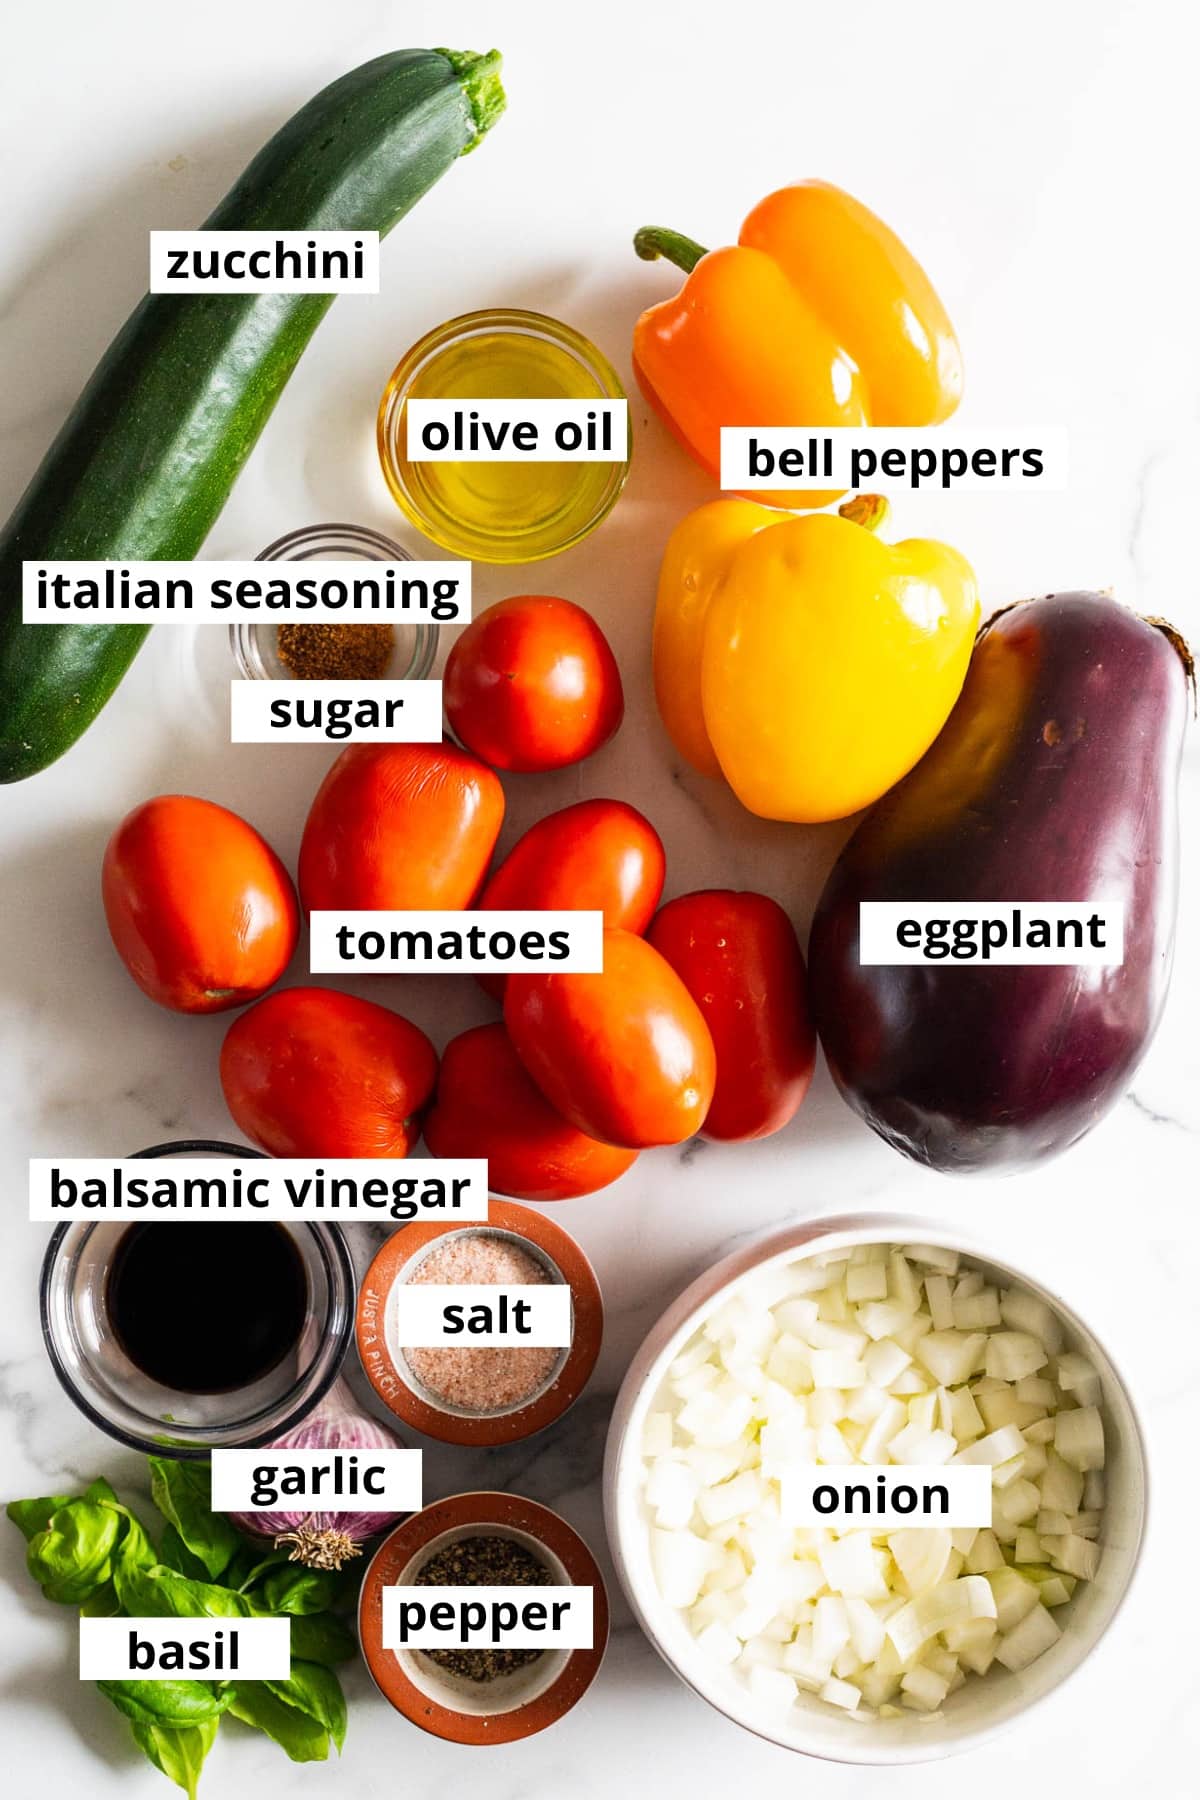 Eggplant, bell peppers, tomatoes, zucchini, olive oil, Italian seasoning, sugar, balsamic vinegar, onion, basil, garlic, salt and pepper.